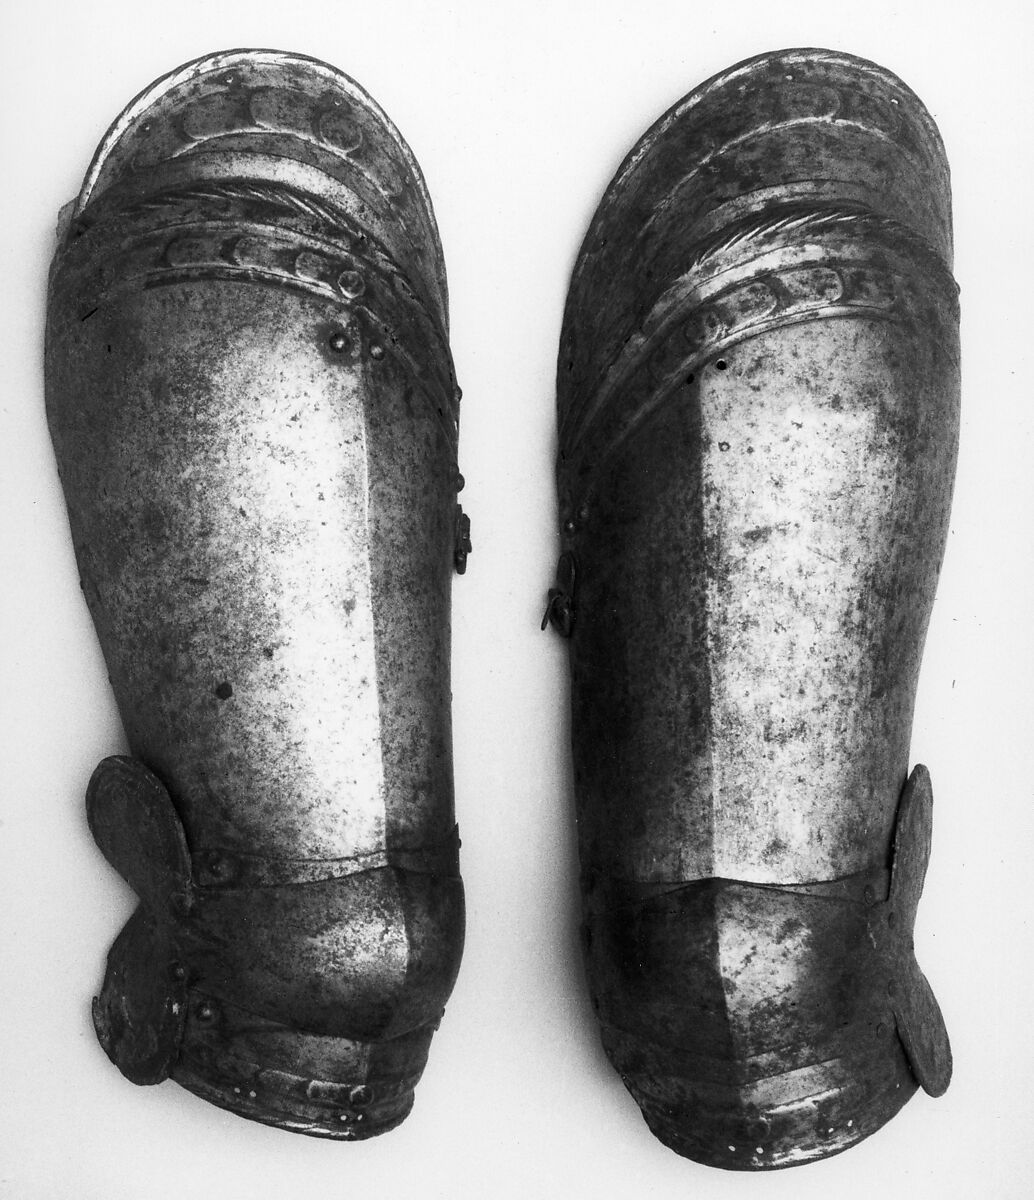 Pair of Thigh Defenses (Cuisses) with Knee Defenses (Poleyns), Steel, German 